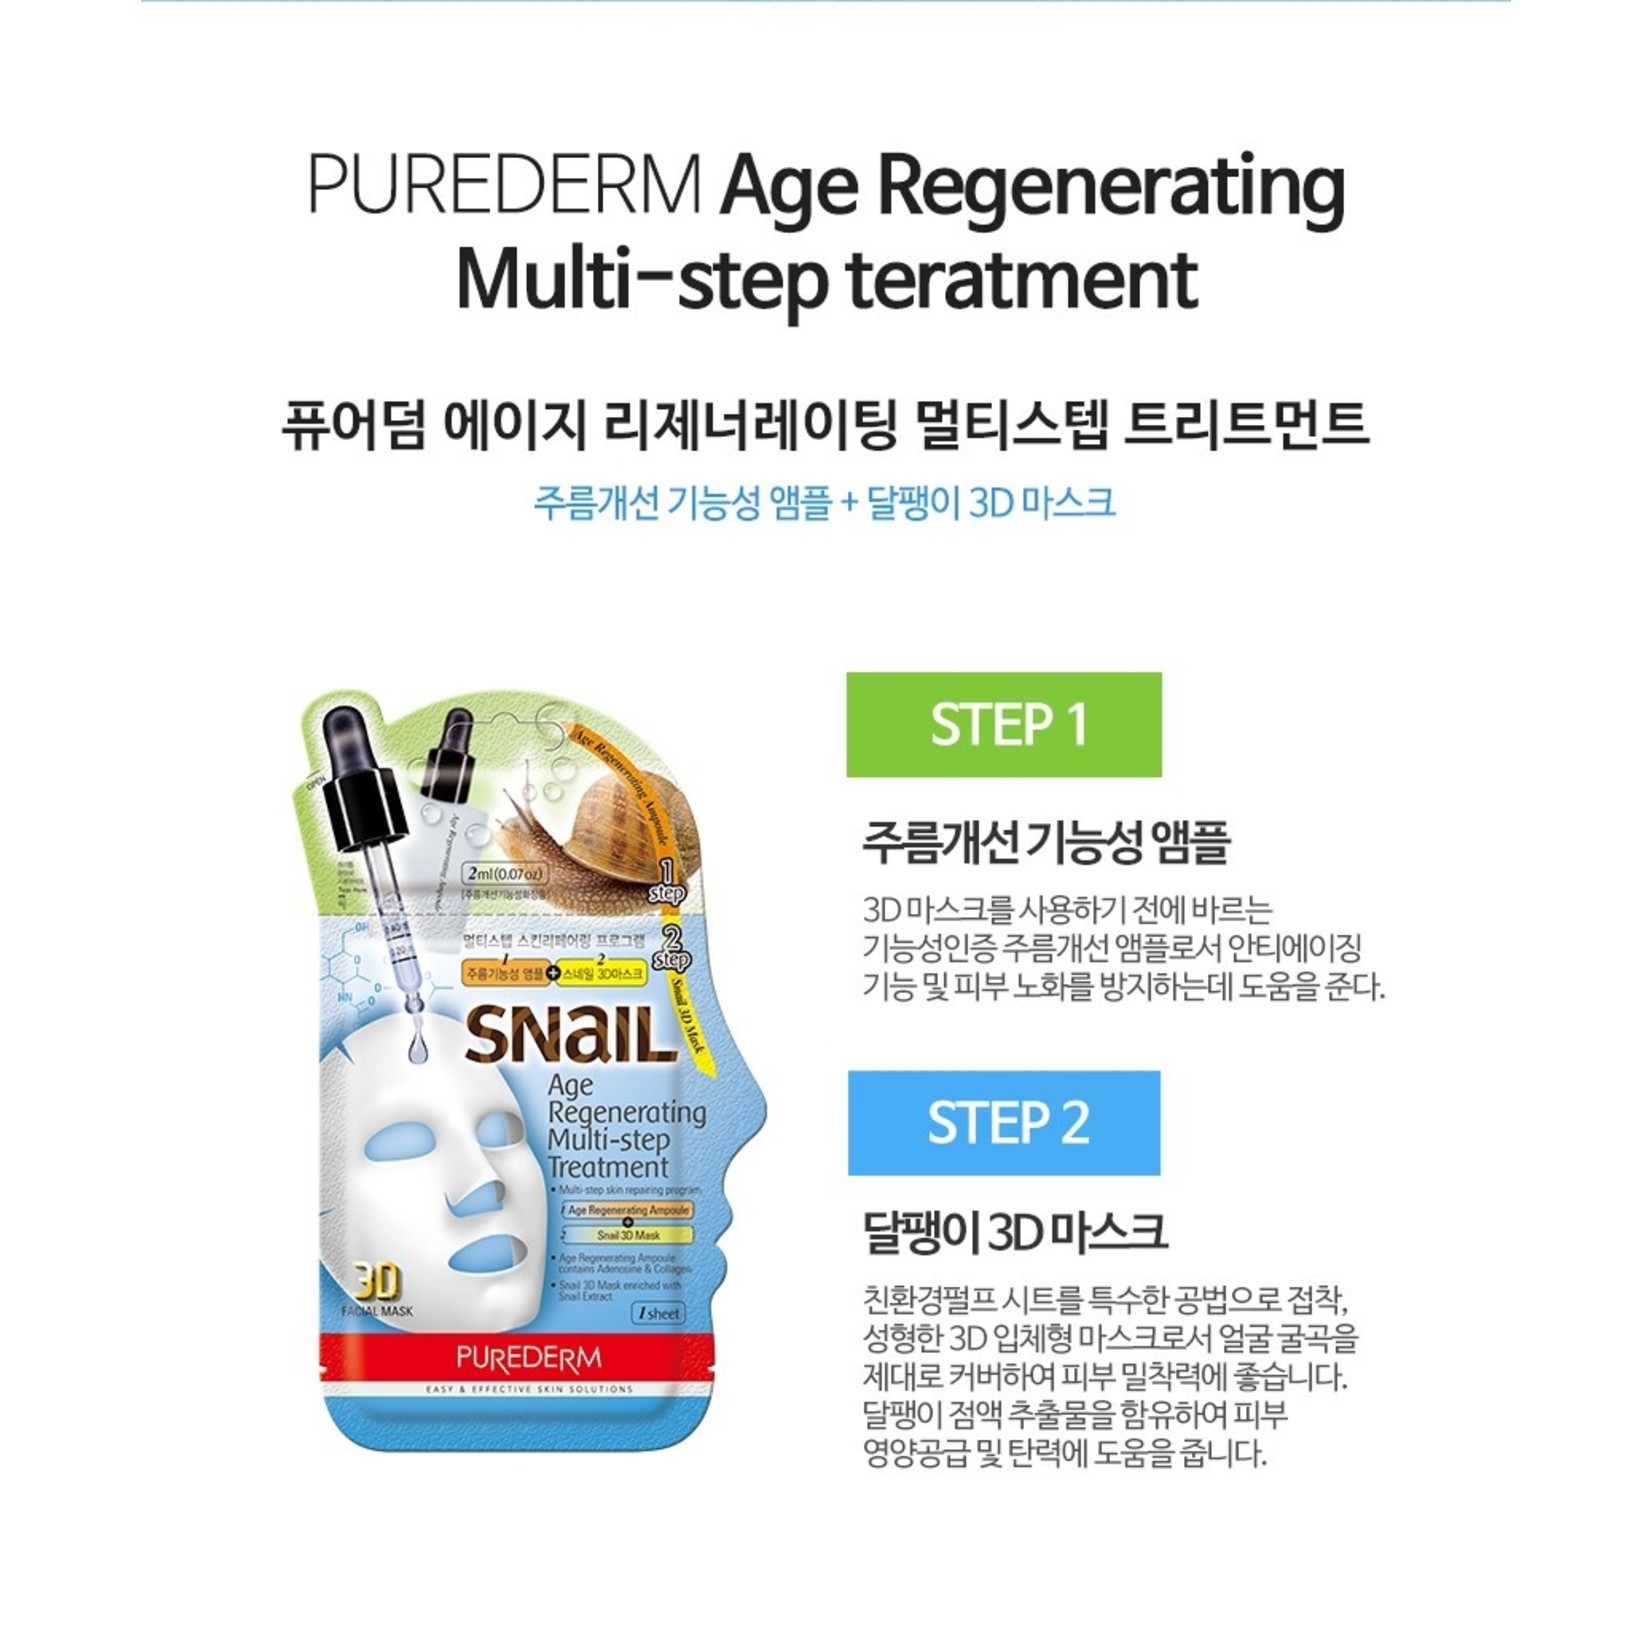 PUREDERM Age Regenerating Multi-step Treatment